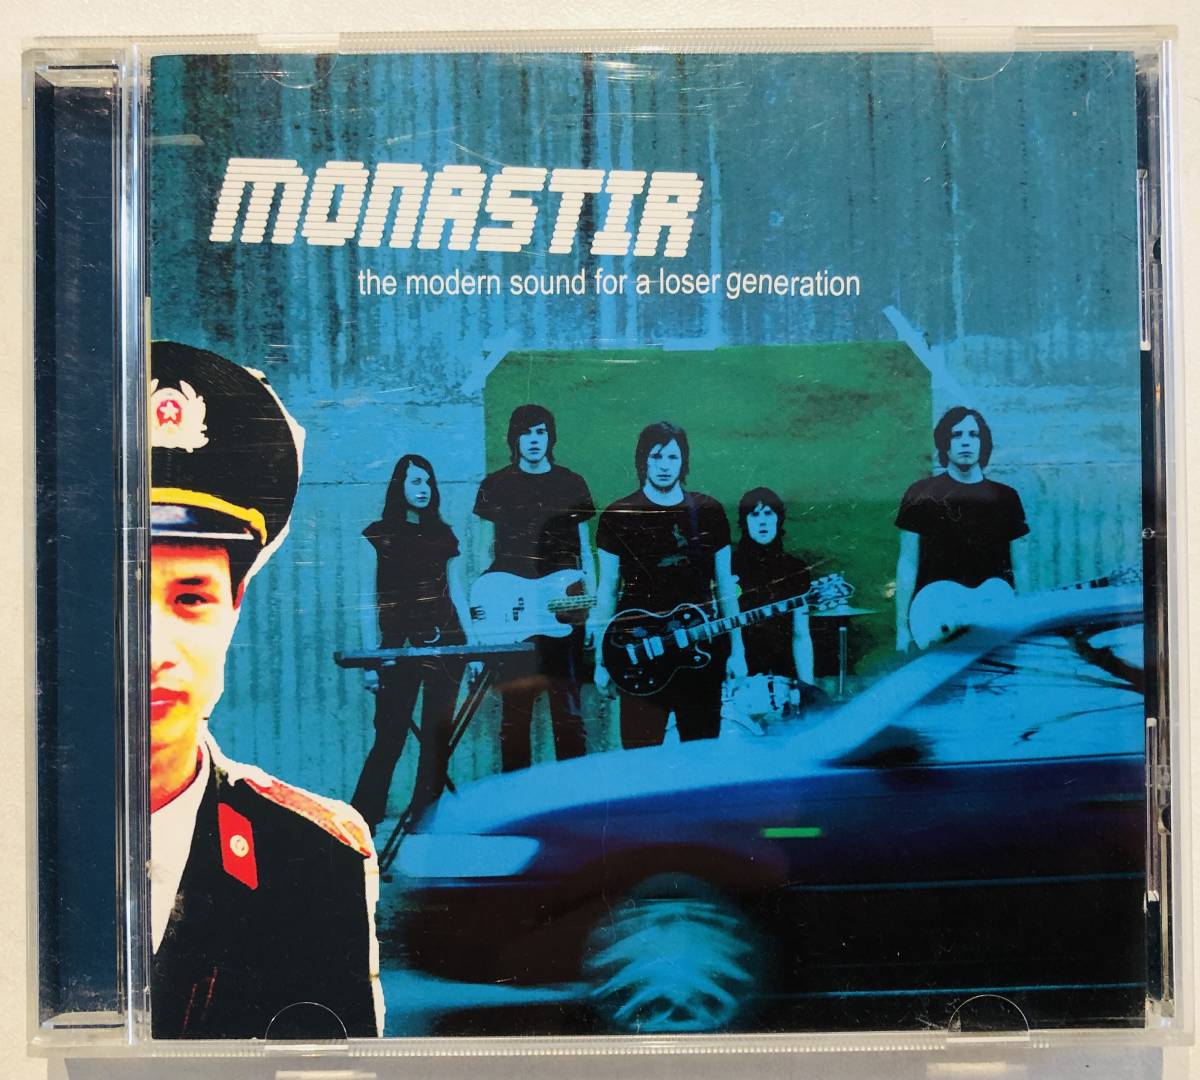 ★ MONASTIR / the modern sound for a loser generation 中古 CD 国内盤 帯付 ボーナストラック3曲収録 モナスティア_画像1